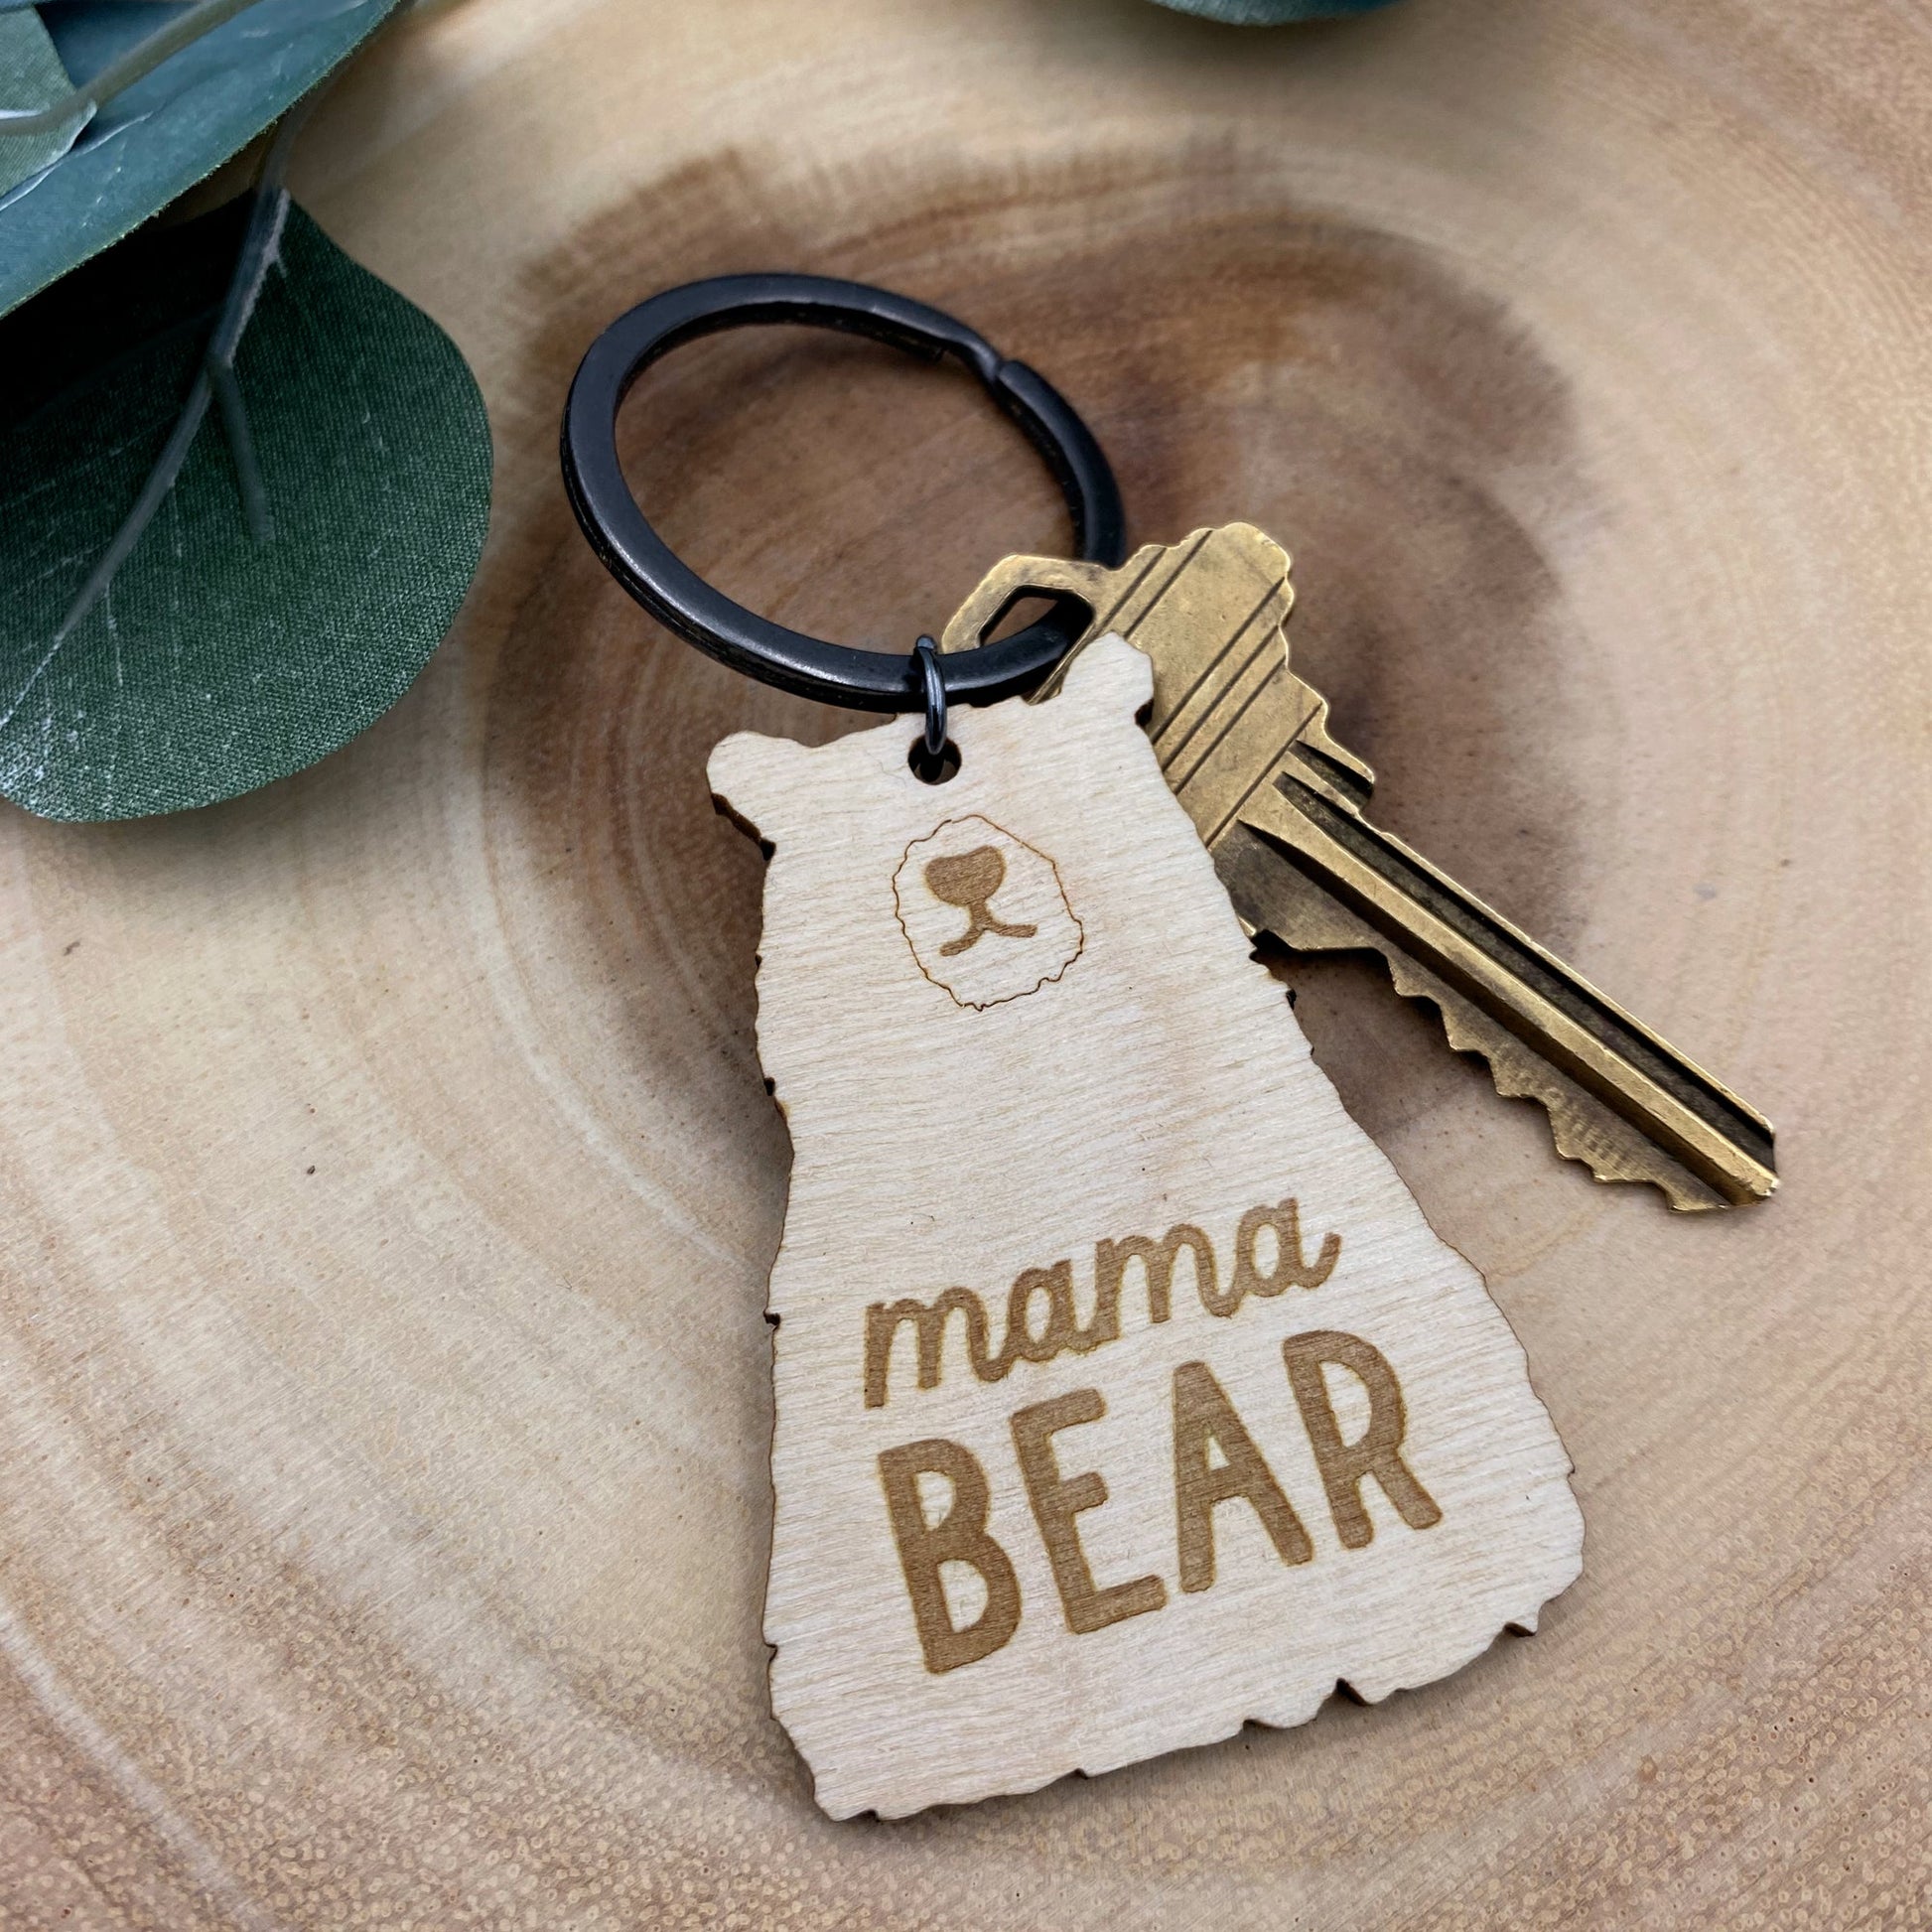 Mama Bear Personalized Keychain - Keychains - Moon Rock Prints